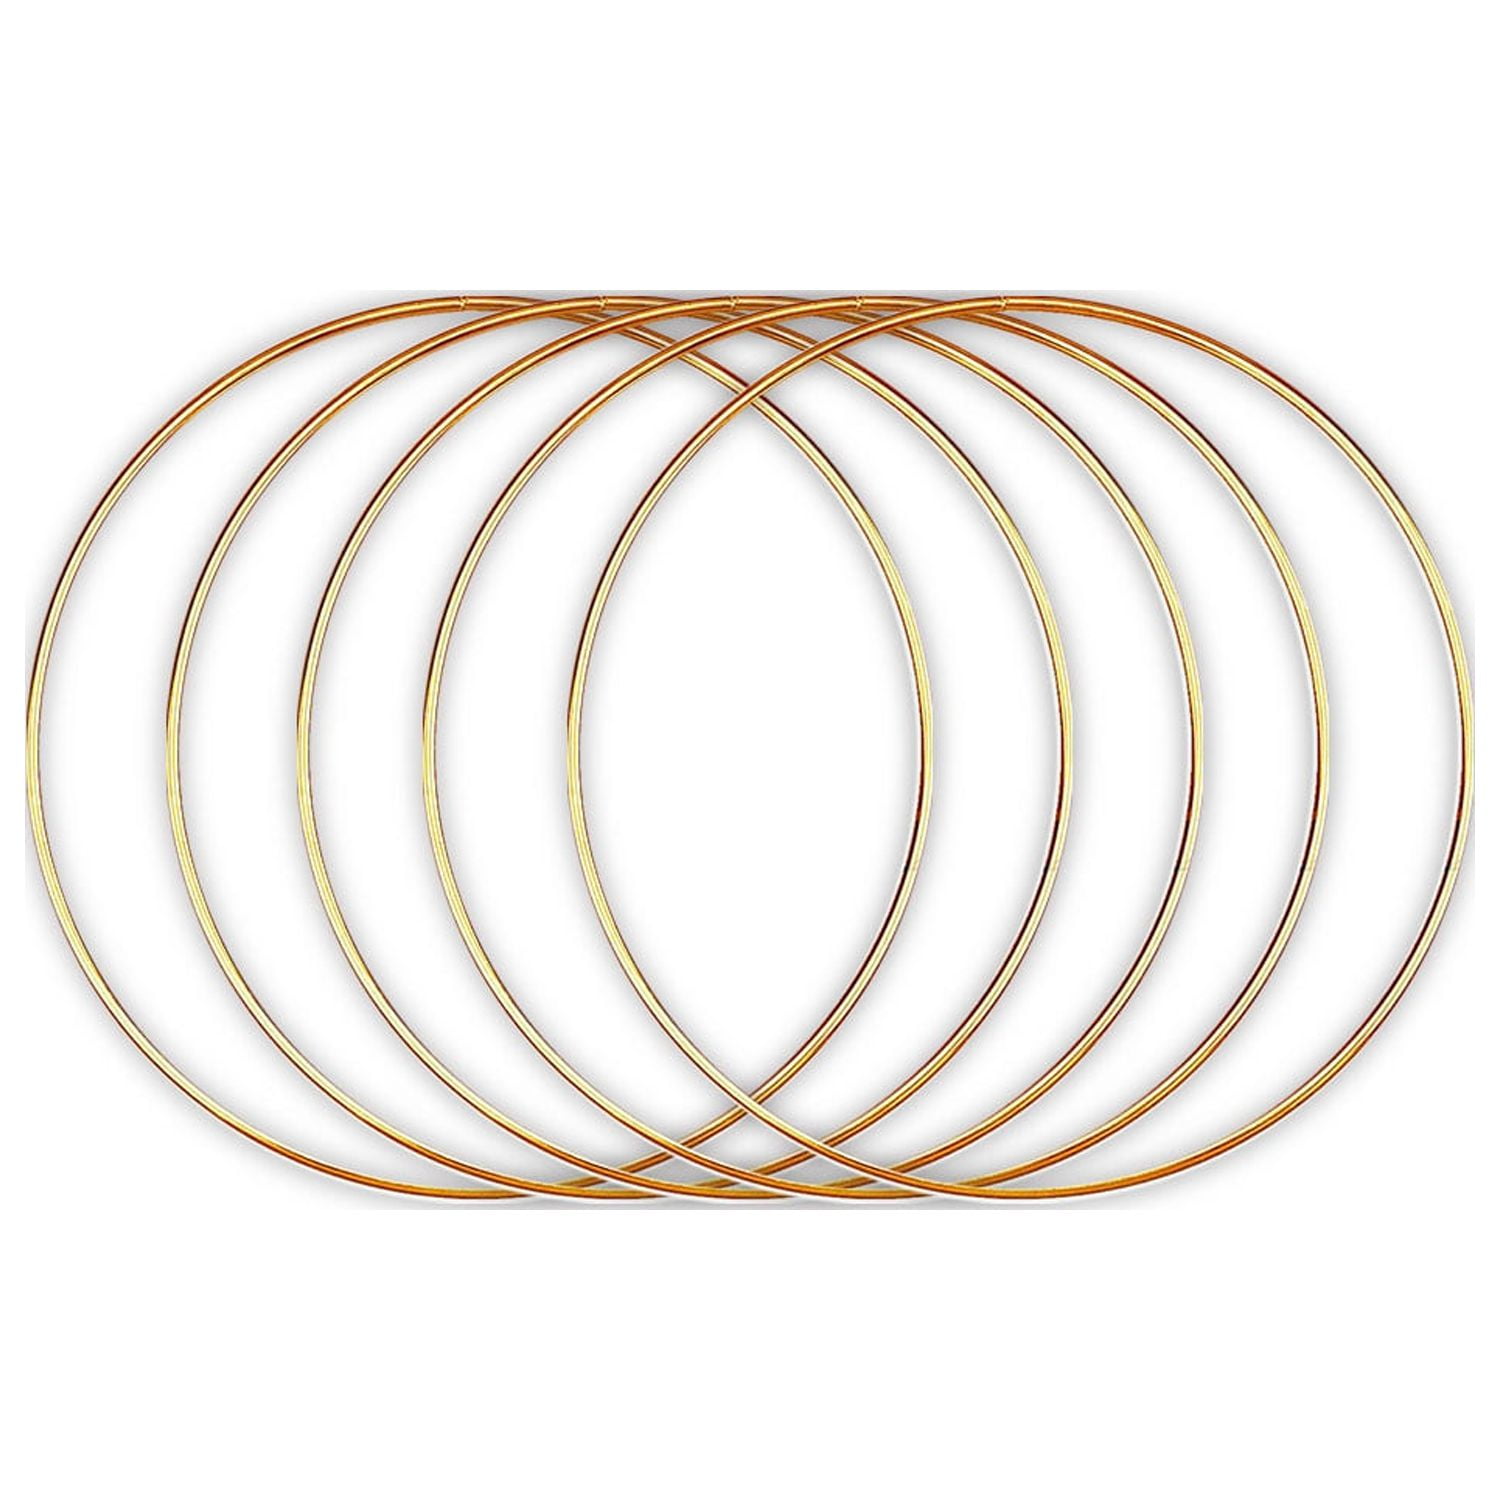 Bulk Buy: 2 2 Inch Brass Metal Craft Macrame Rings (10-pack)